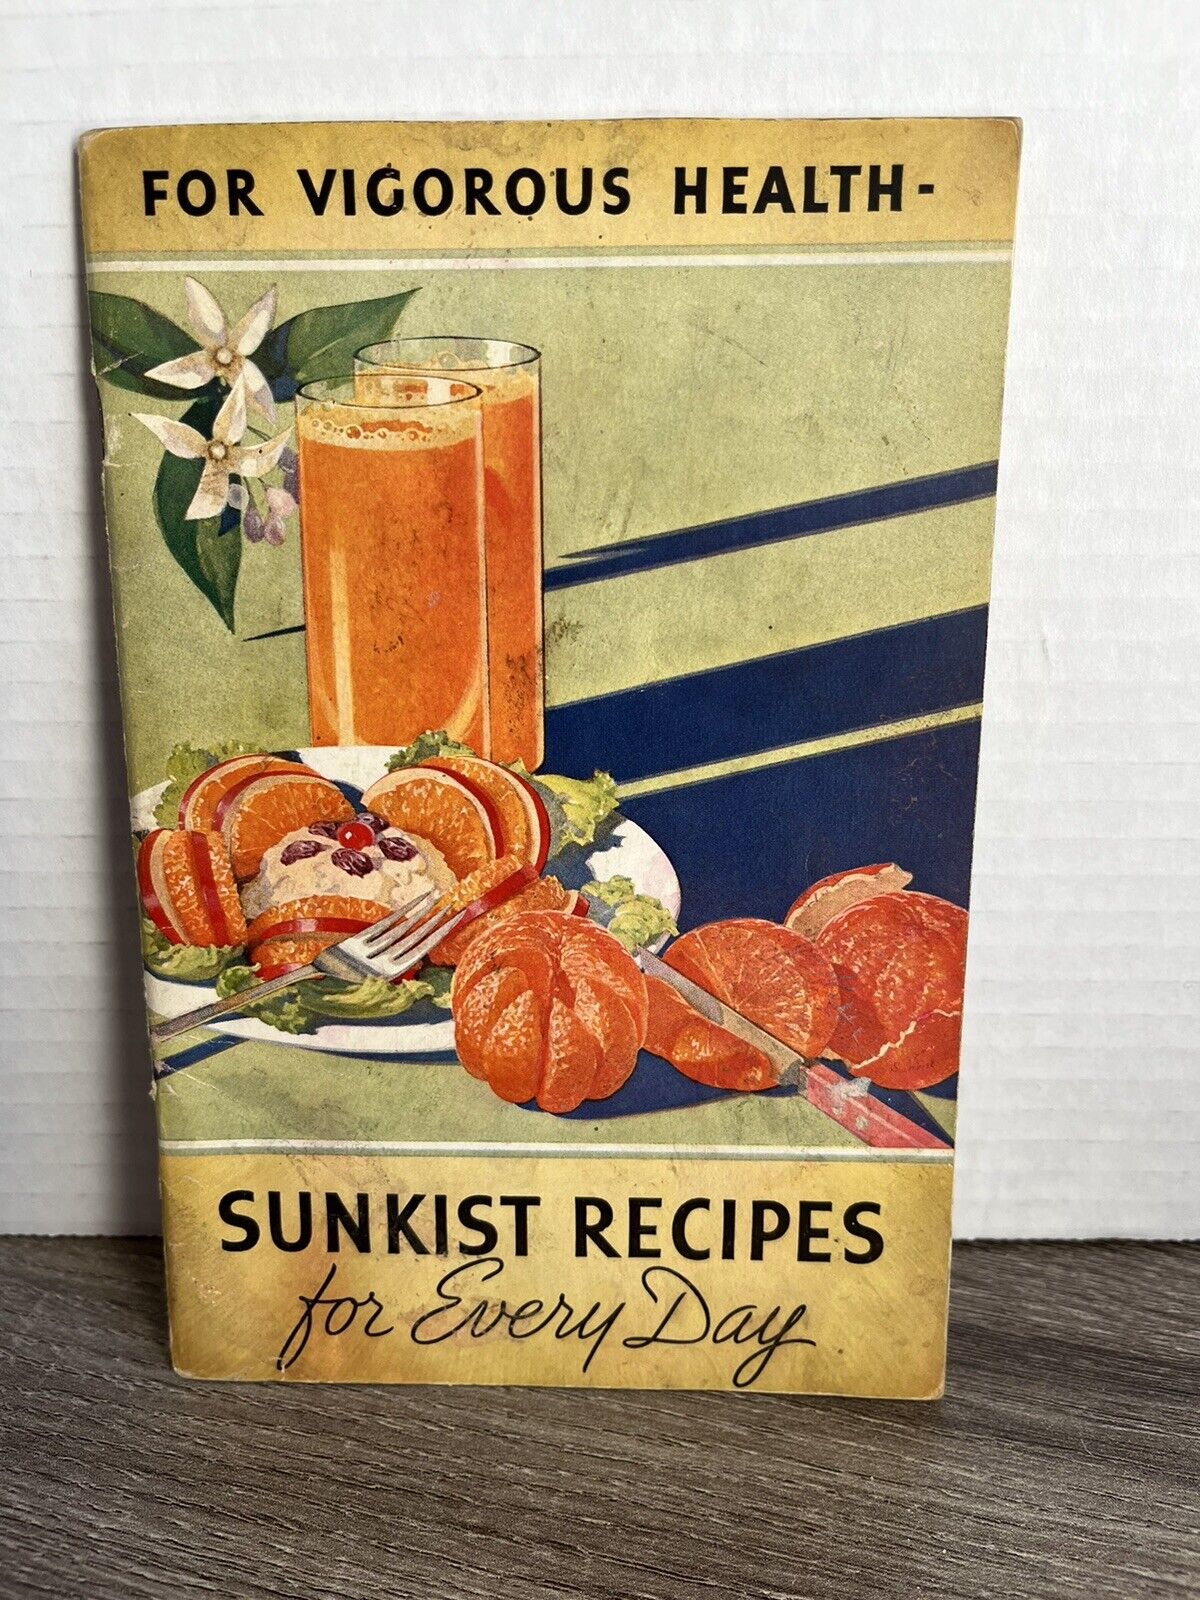 Vintage 1936 Sunkist Recipes for Vigorous Health - Oranges and Lemons